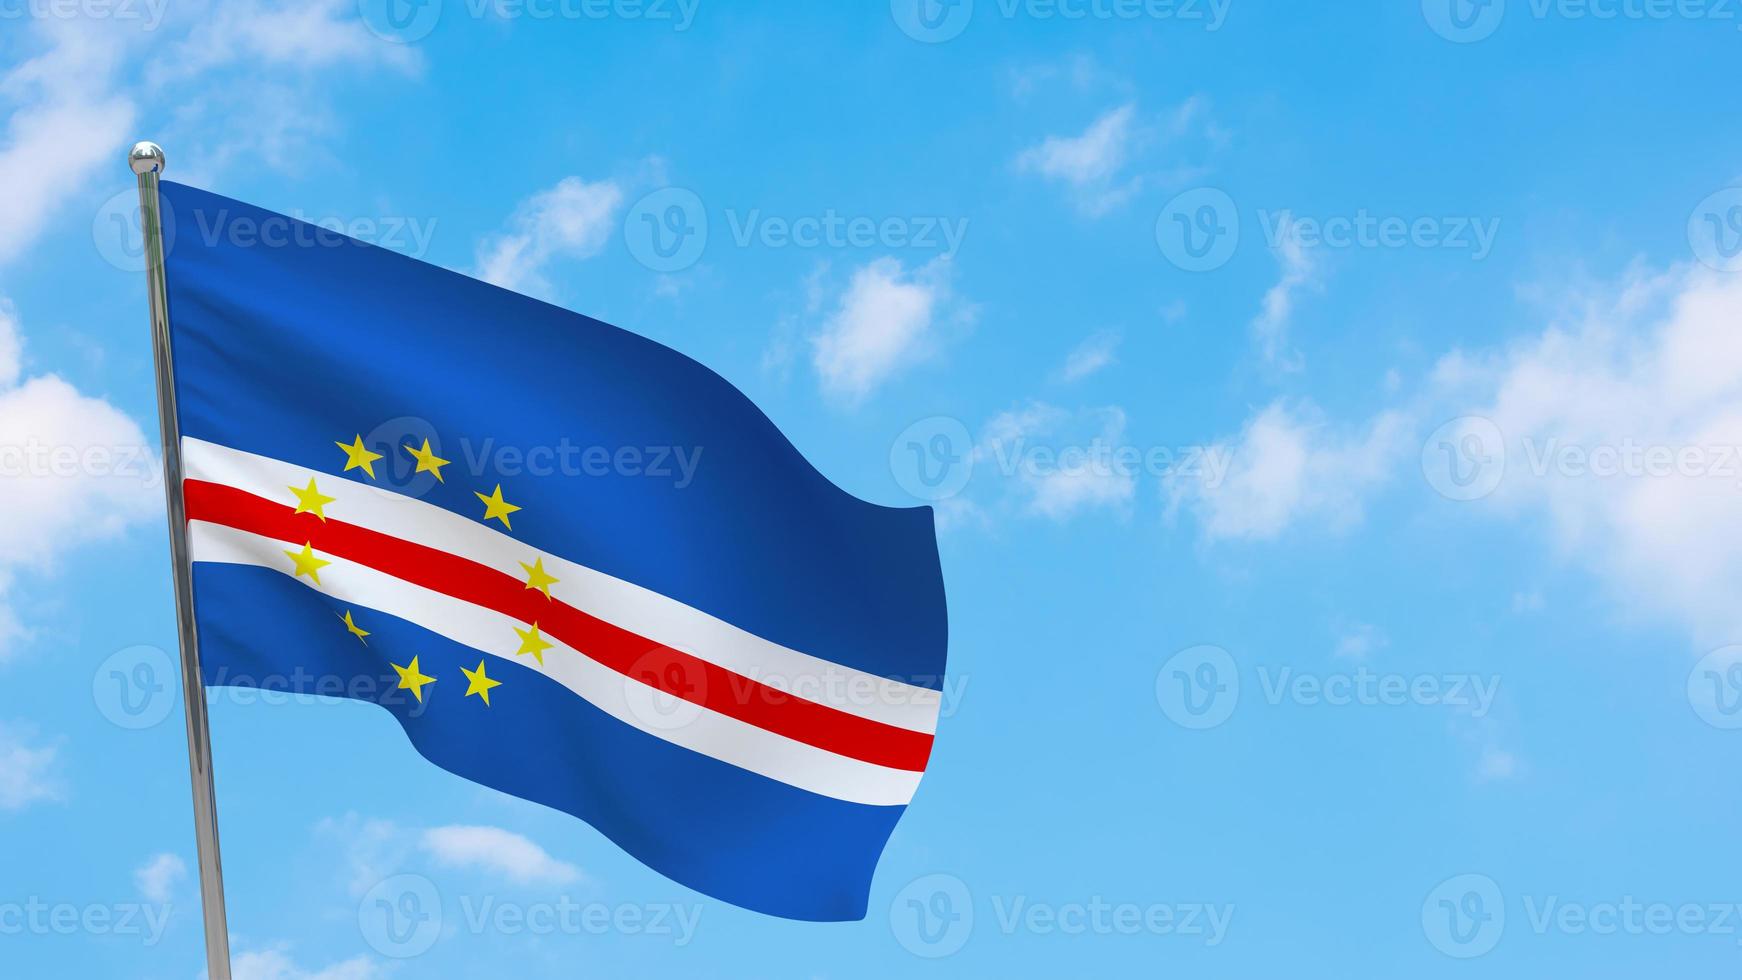 Cape Verde flag on pole photo